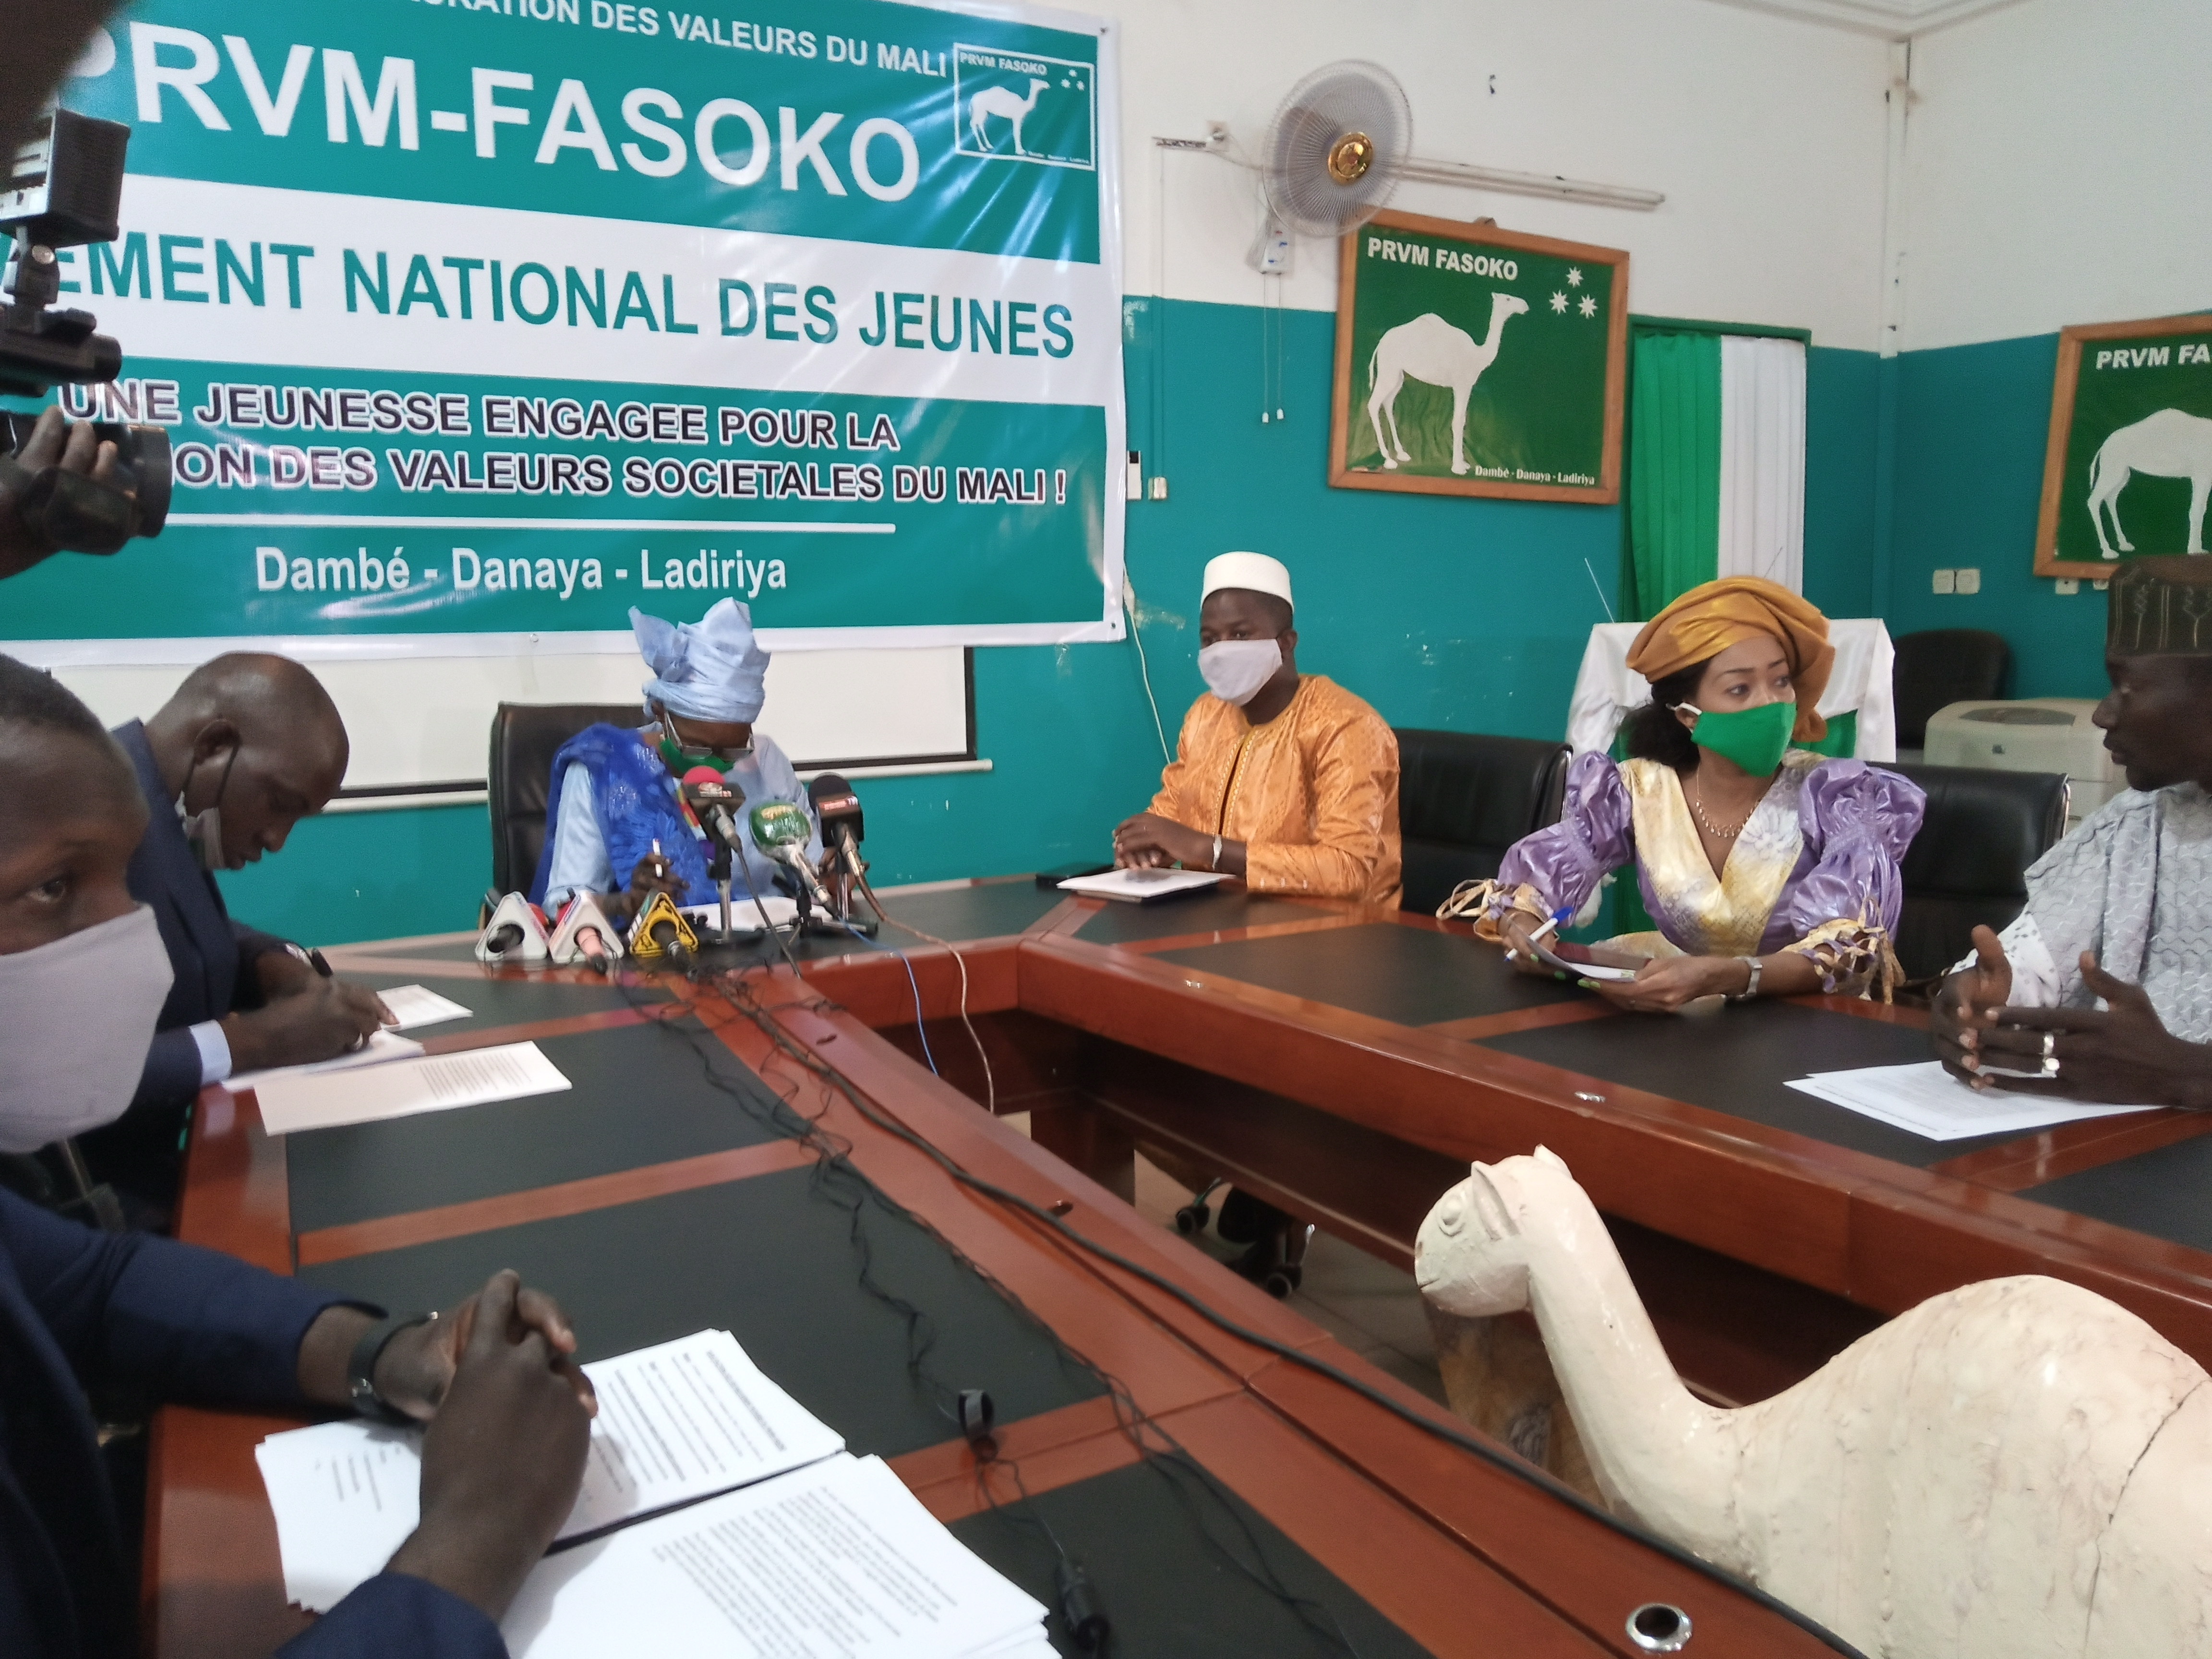 PRVM-FASOKO : Les exclus s’expriment